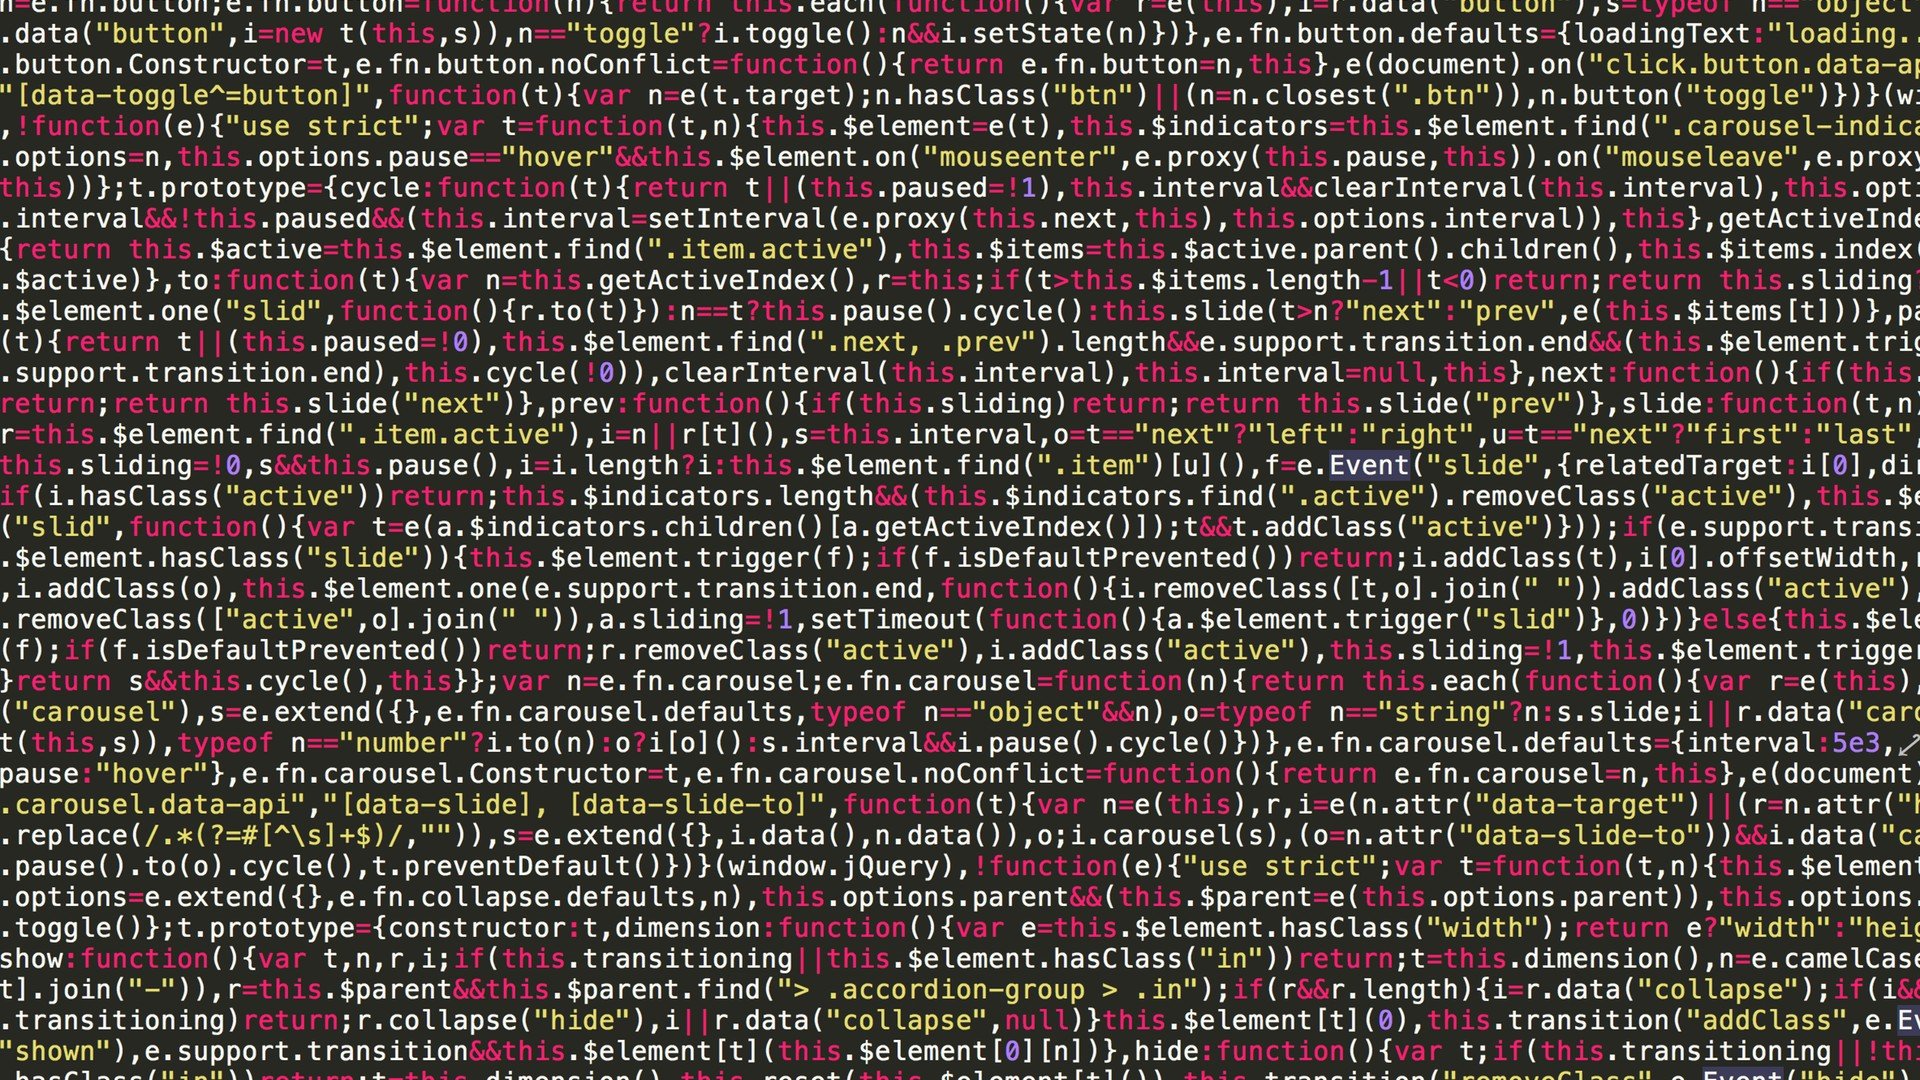 PHP Syntax wallpaper by Danielsan89 on DeviantArt